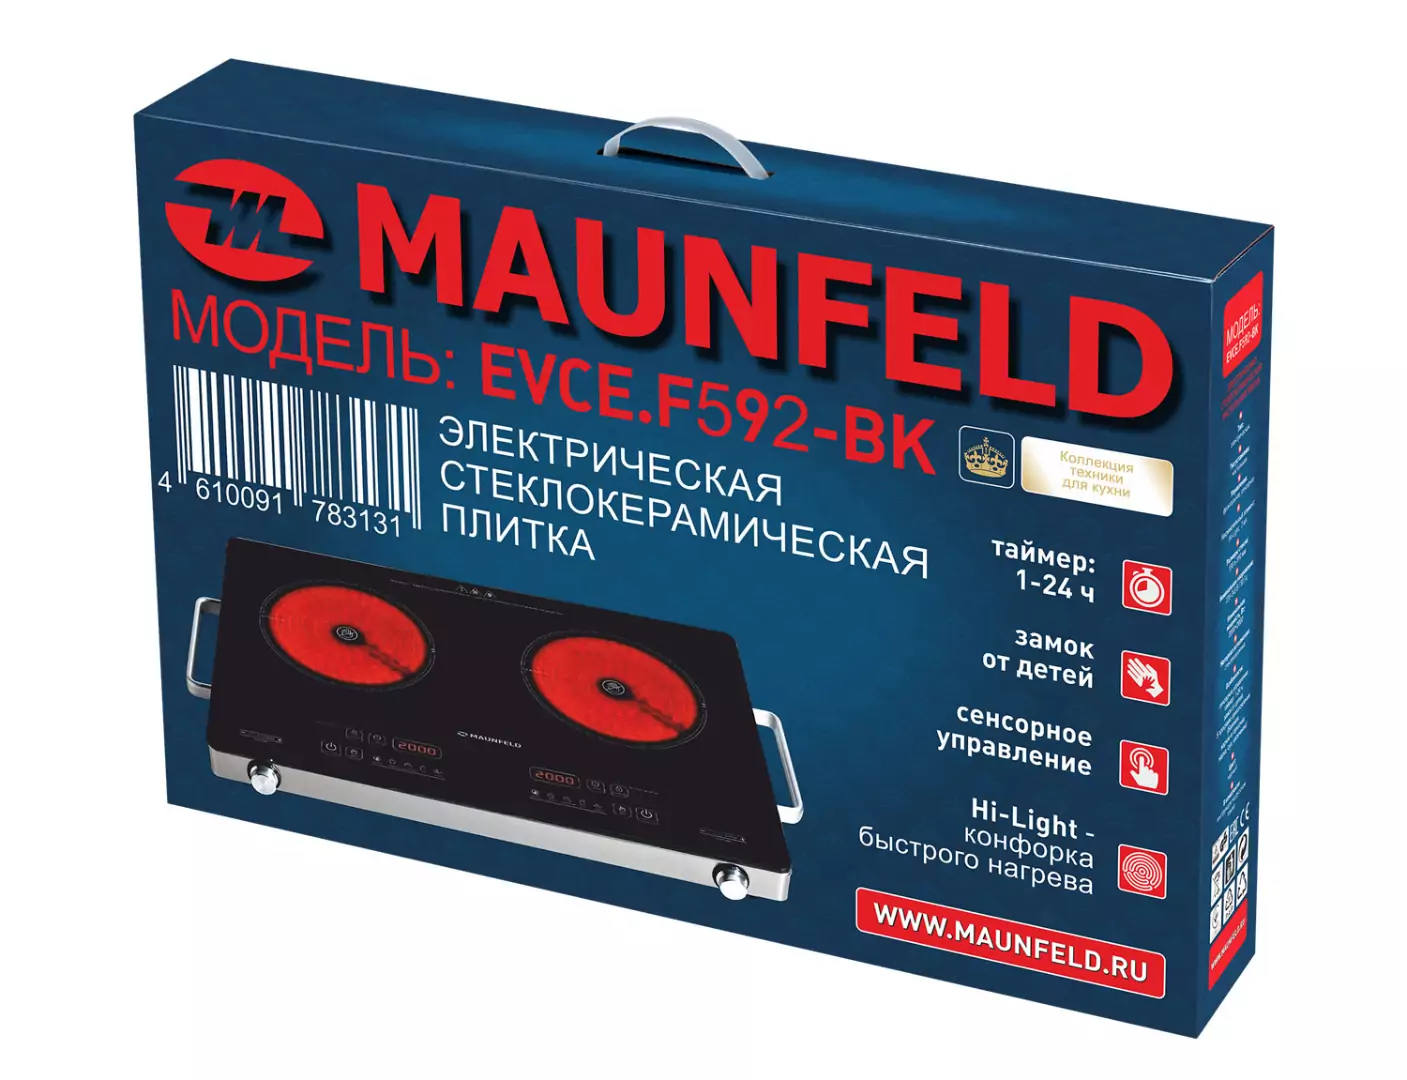 Maunfeld EVCE.F592-BK.13